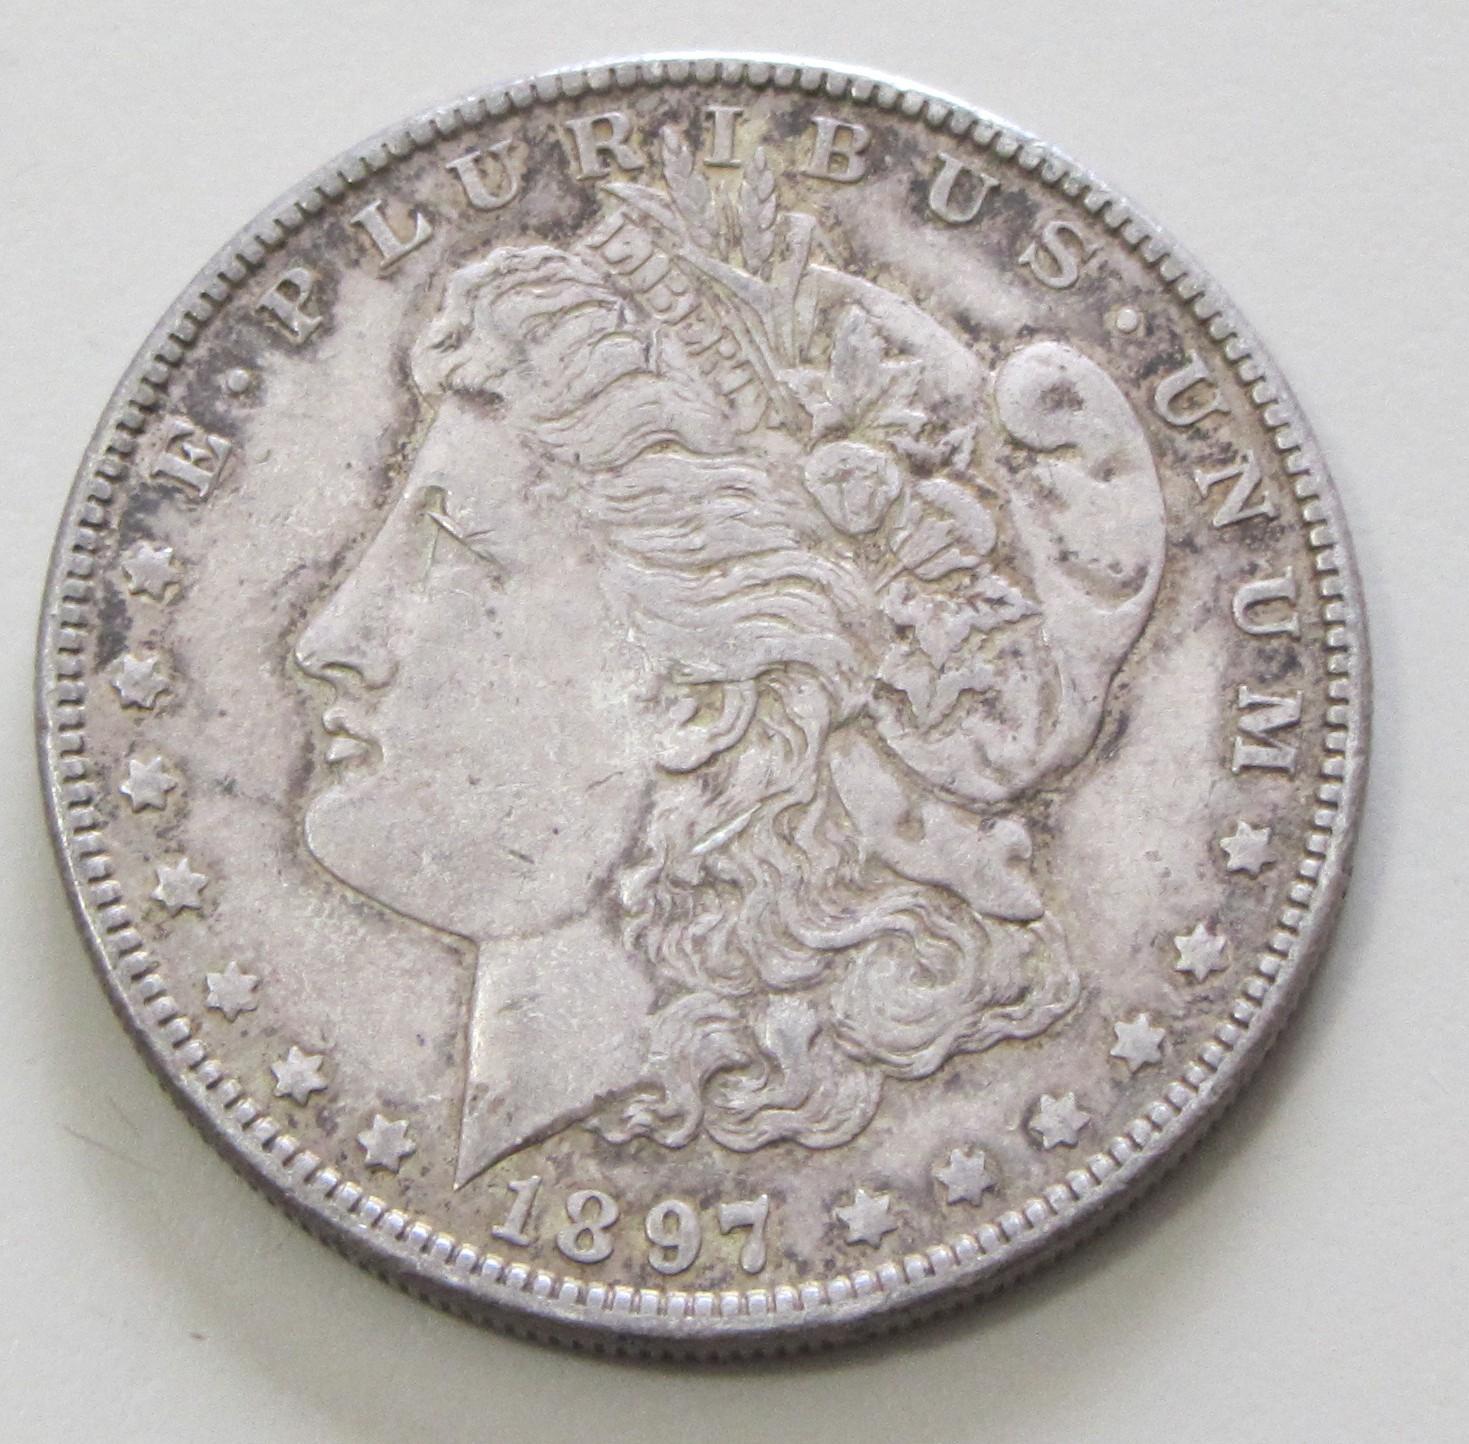 $1 1897 MORGAN